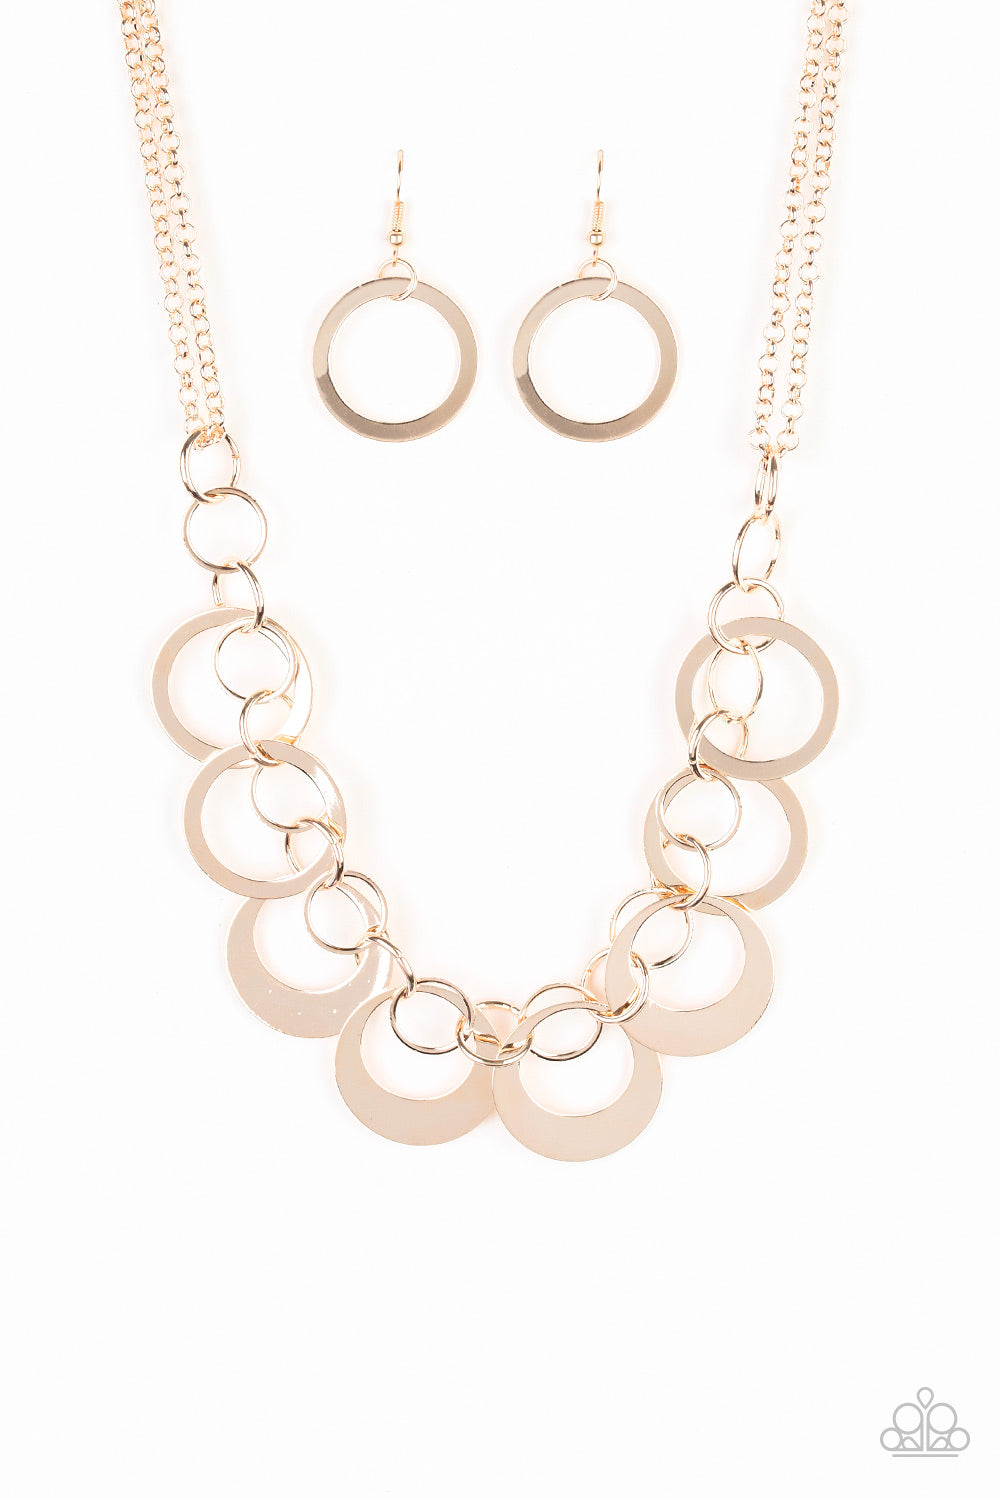 In Full Orbit - rose gold - Paparazzi necklace